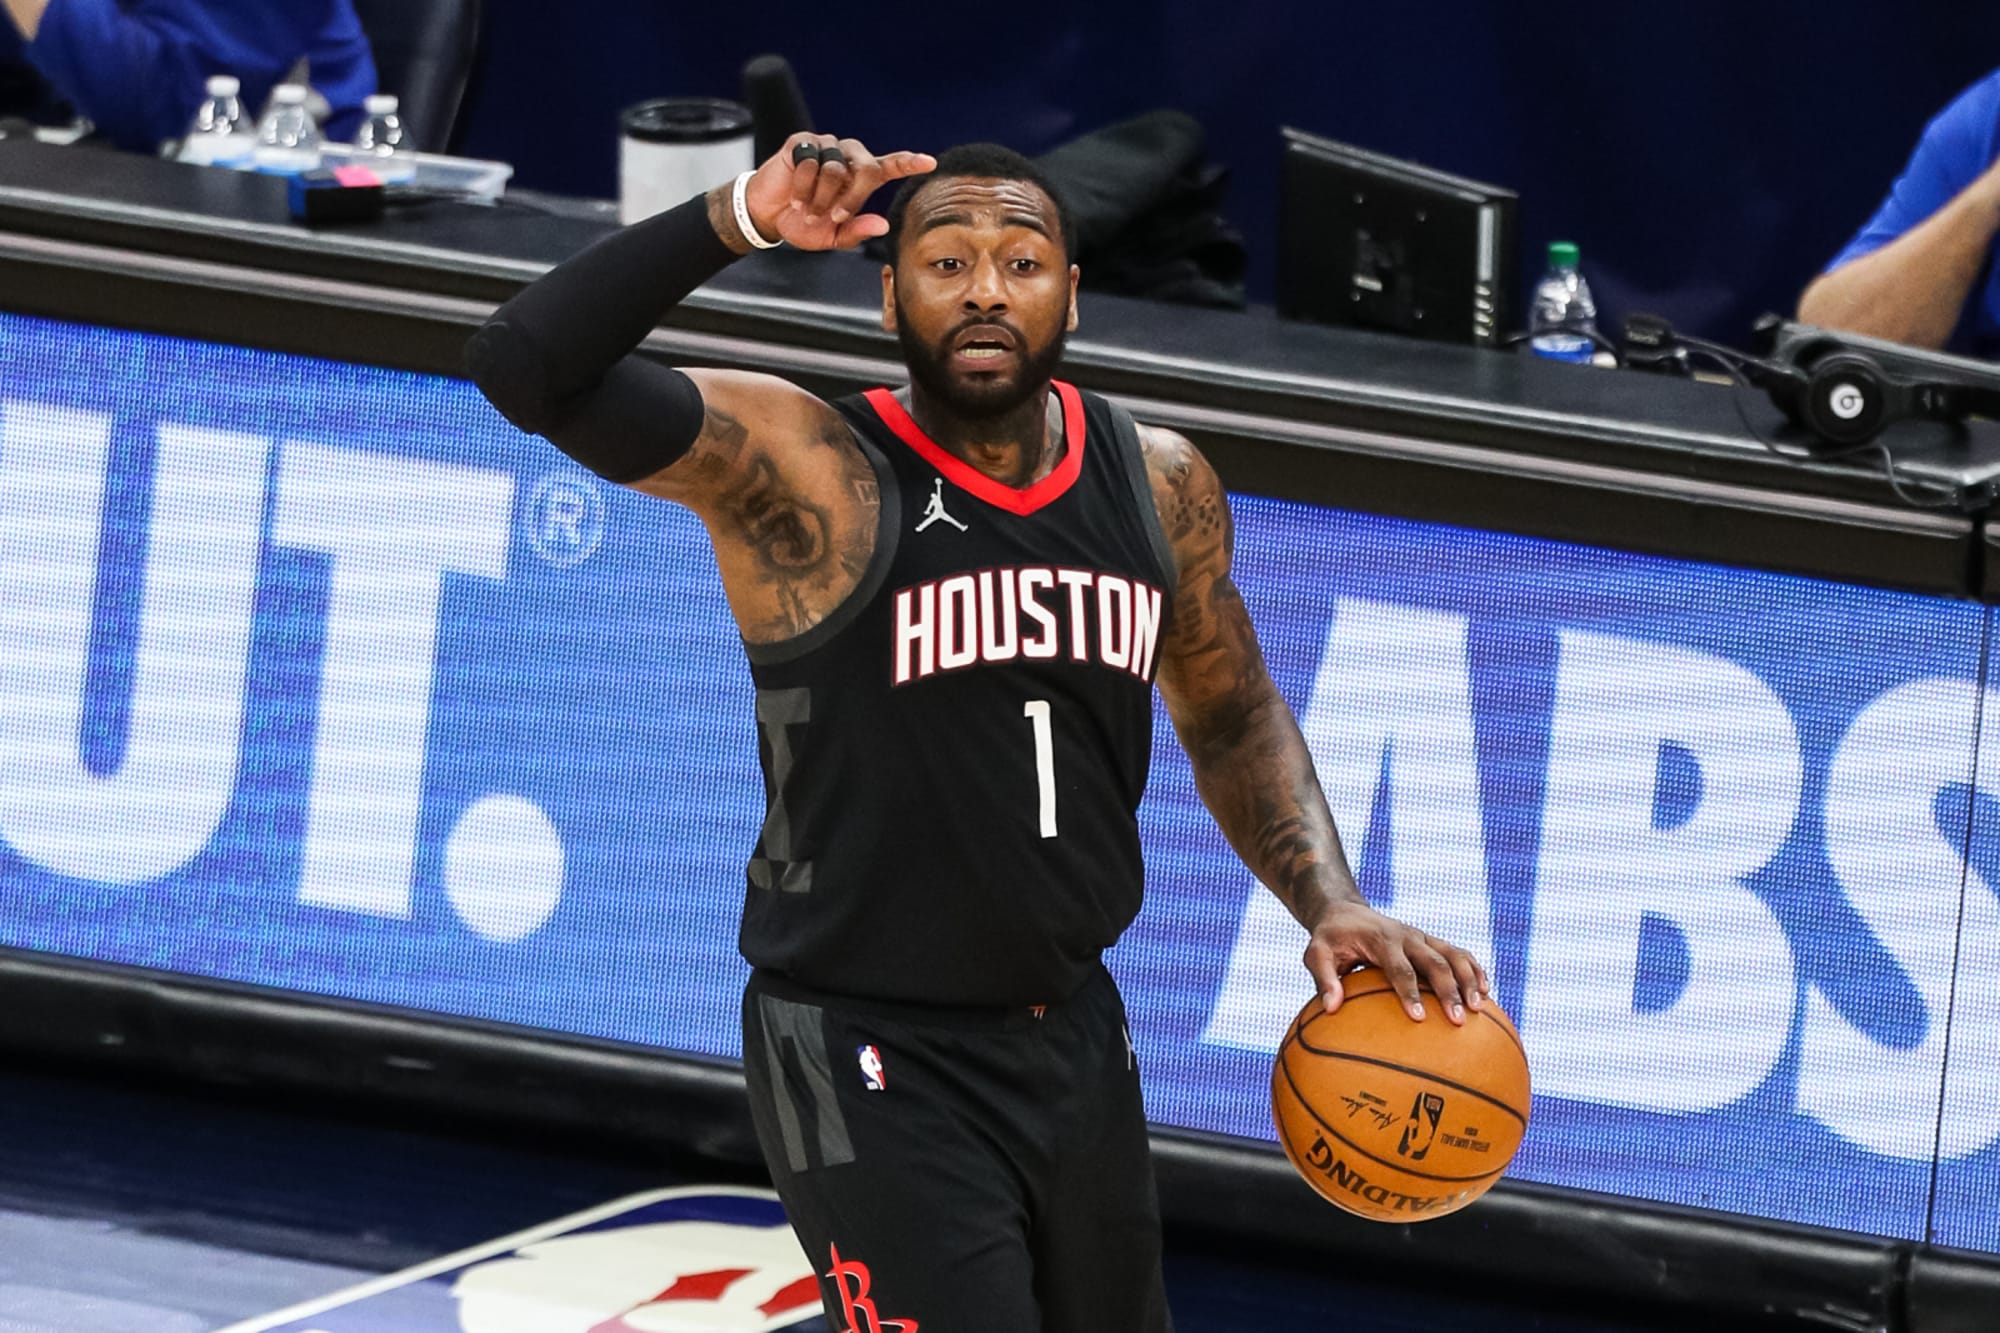 2021-22 NBA Hoops City Edition #13 John Wall - Houston Rockets